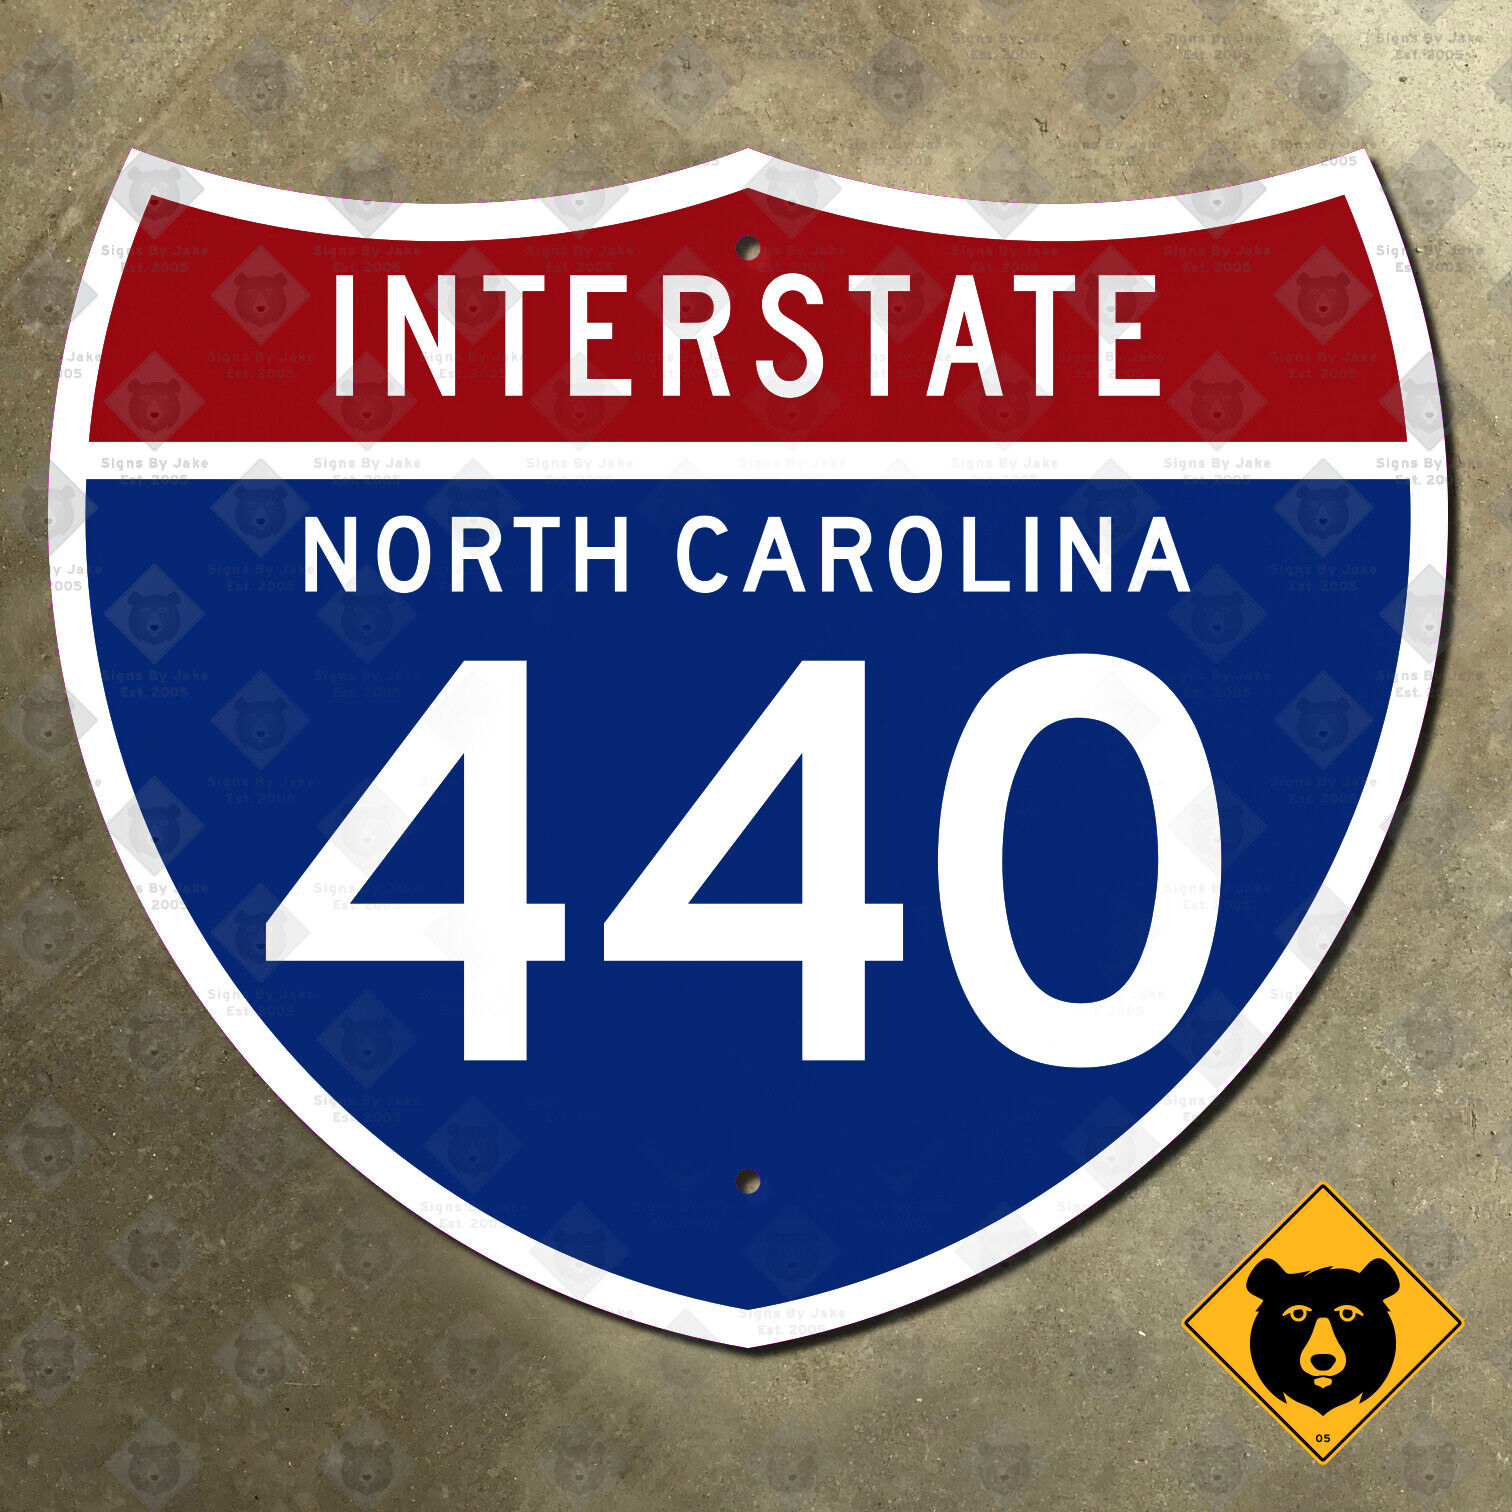 North Carolina interstate 440 route marker road sign 1961 Raleigh Beltline 21x18